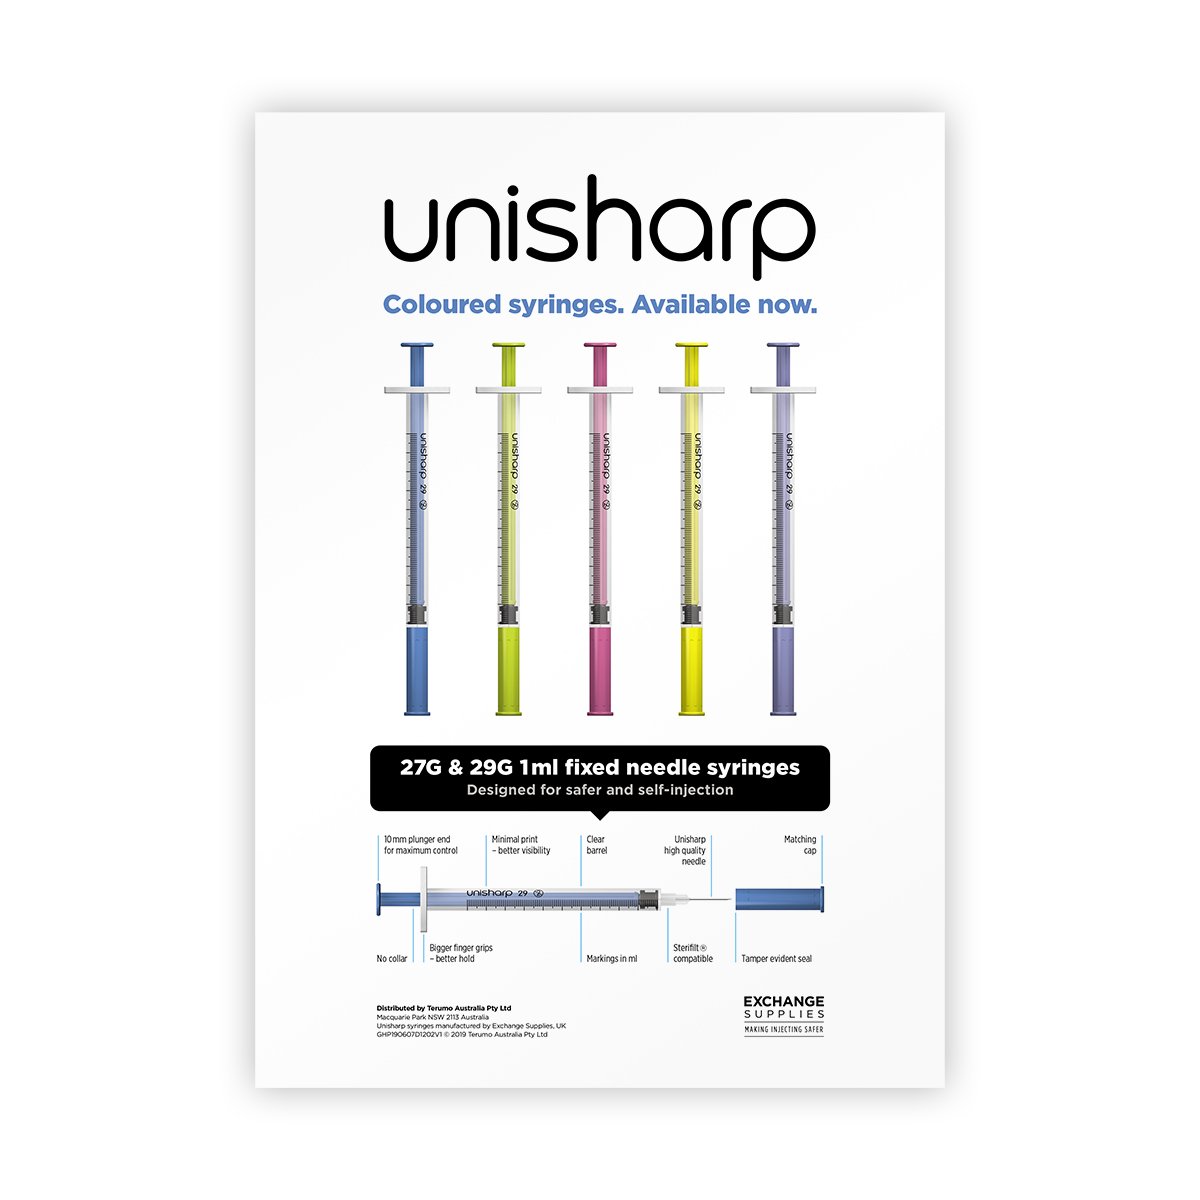 Unisharp fixed A4 Poster